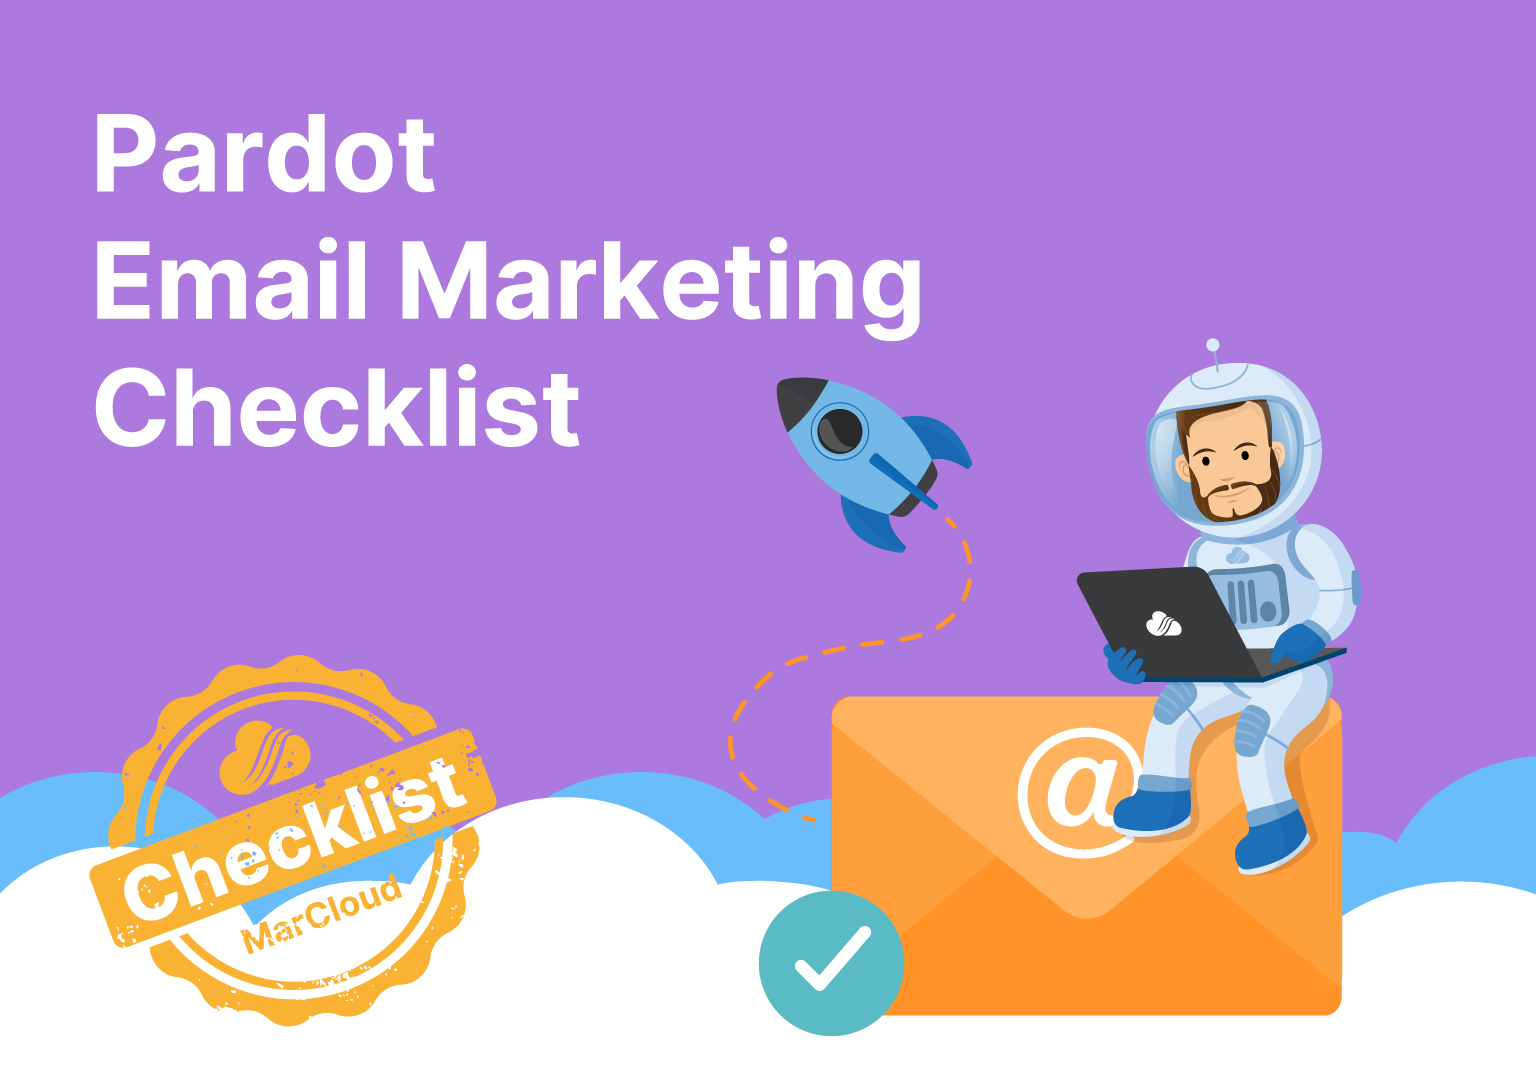 Pardot Email Marketing Checklist